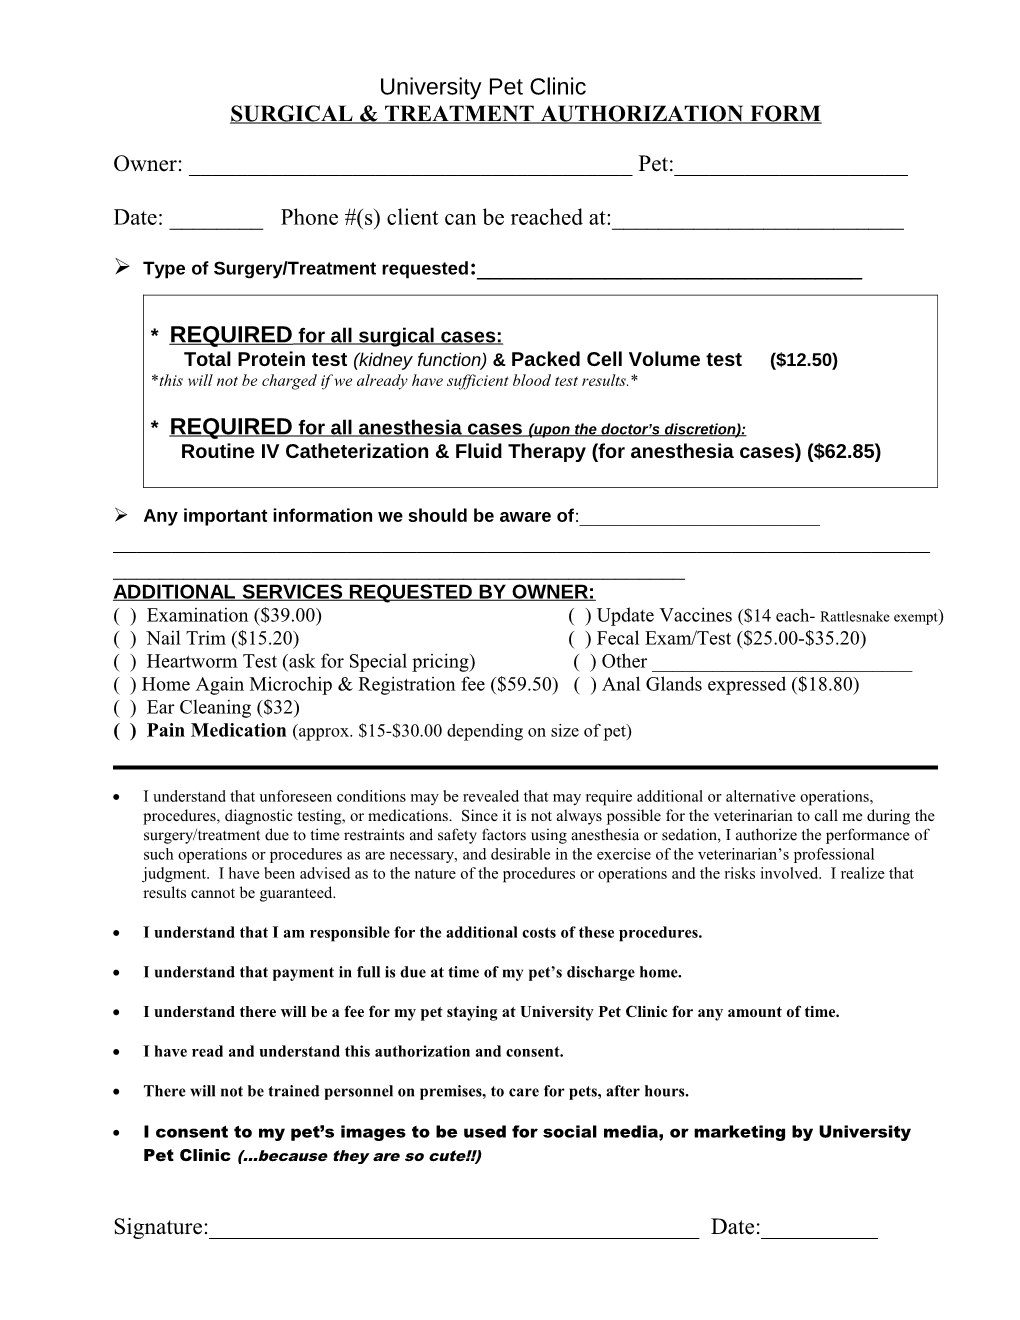 Surgical & Treatment Authorization Form